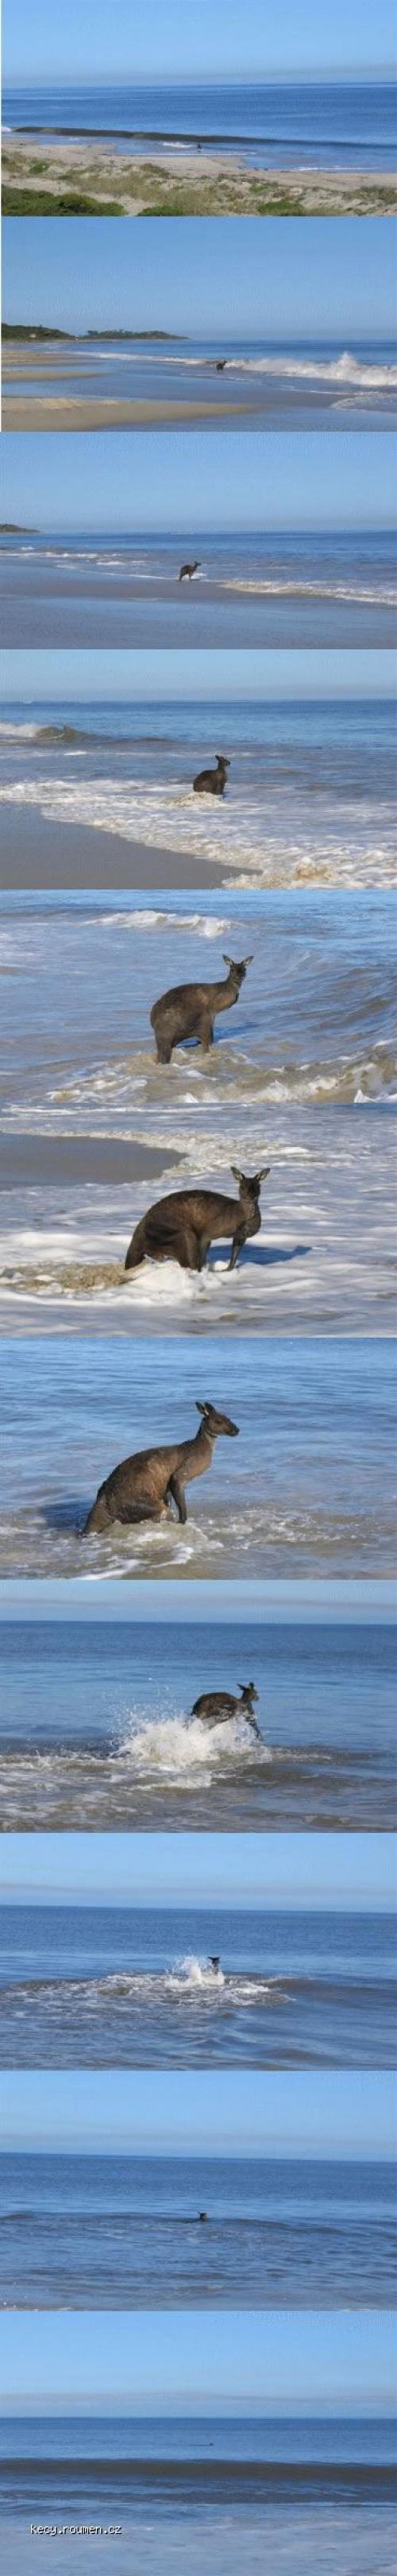  kangaroo suicide 